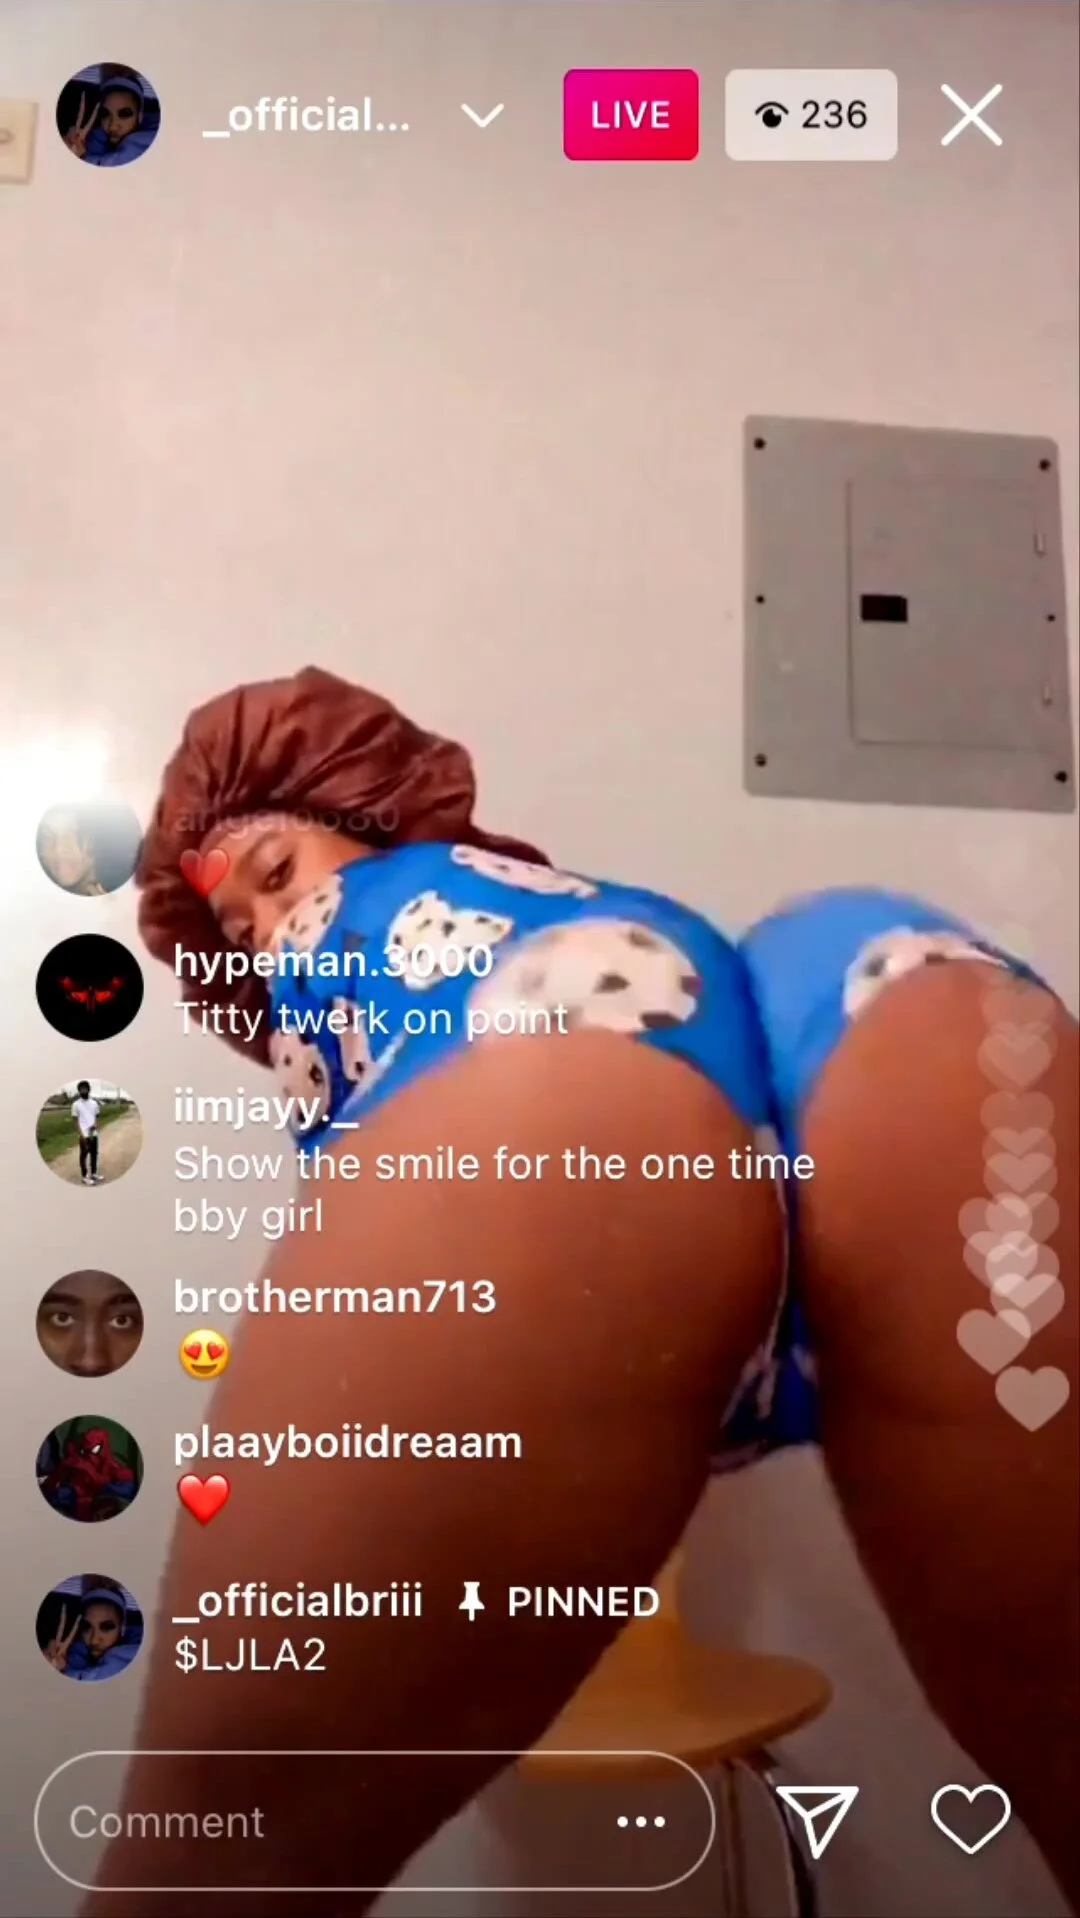 Ebony nip slip live picture